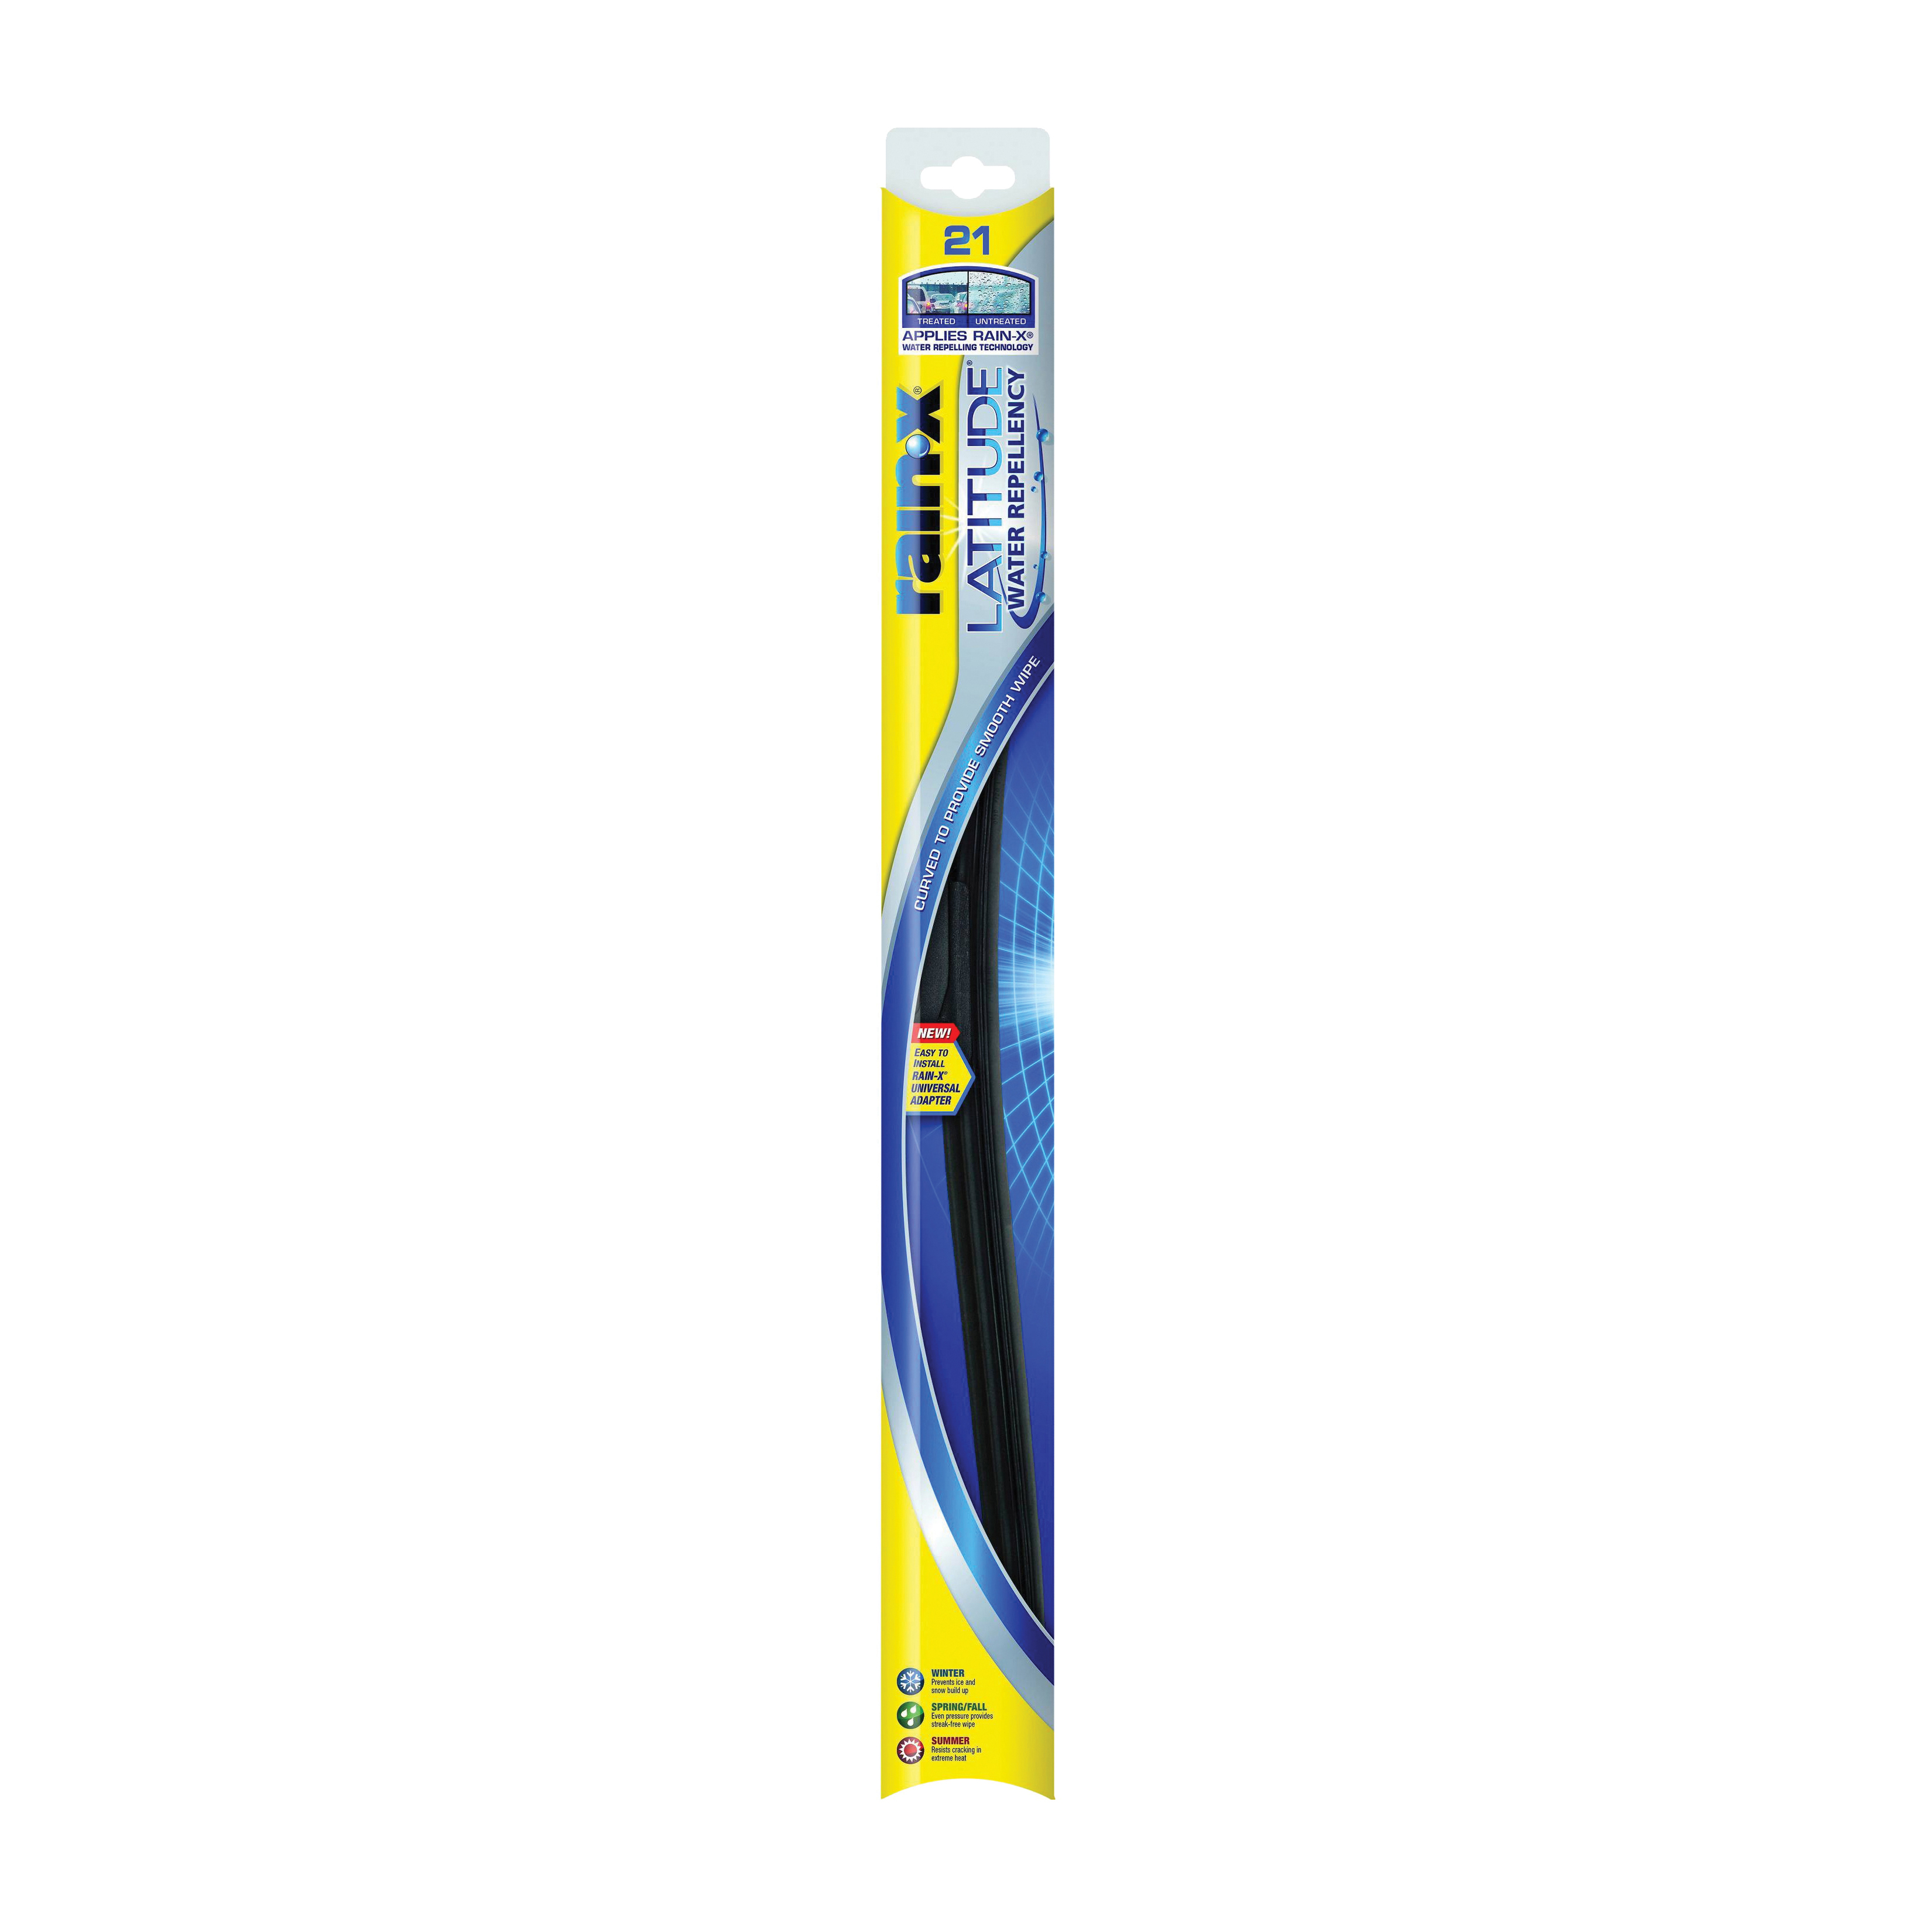 Rain-X Latitude Water Repellency Wiper Blade, 20, Black